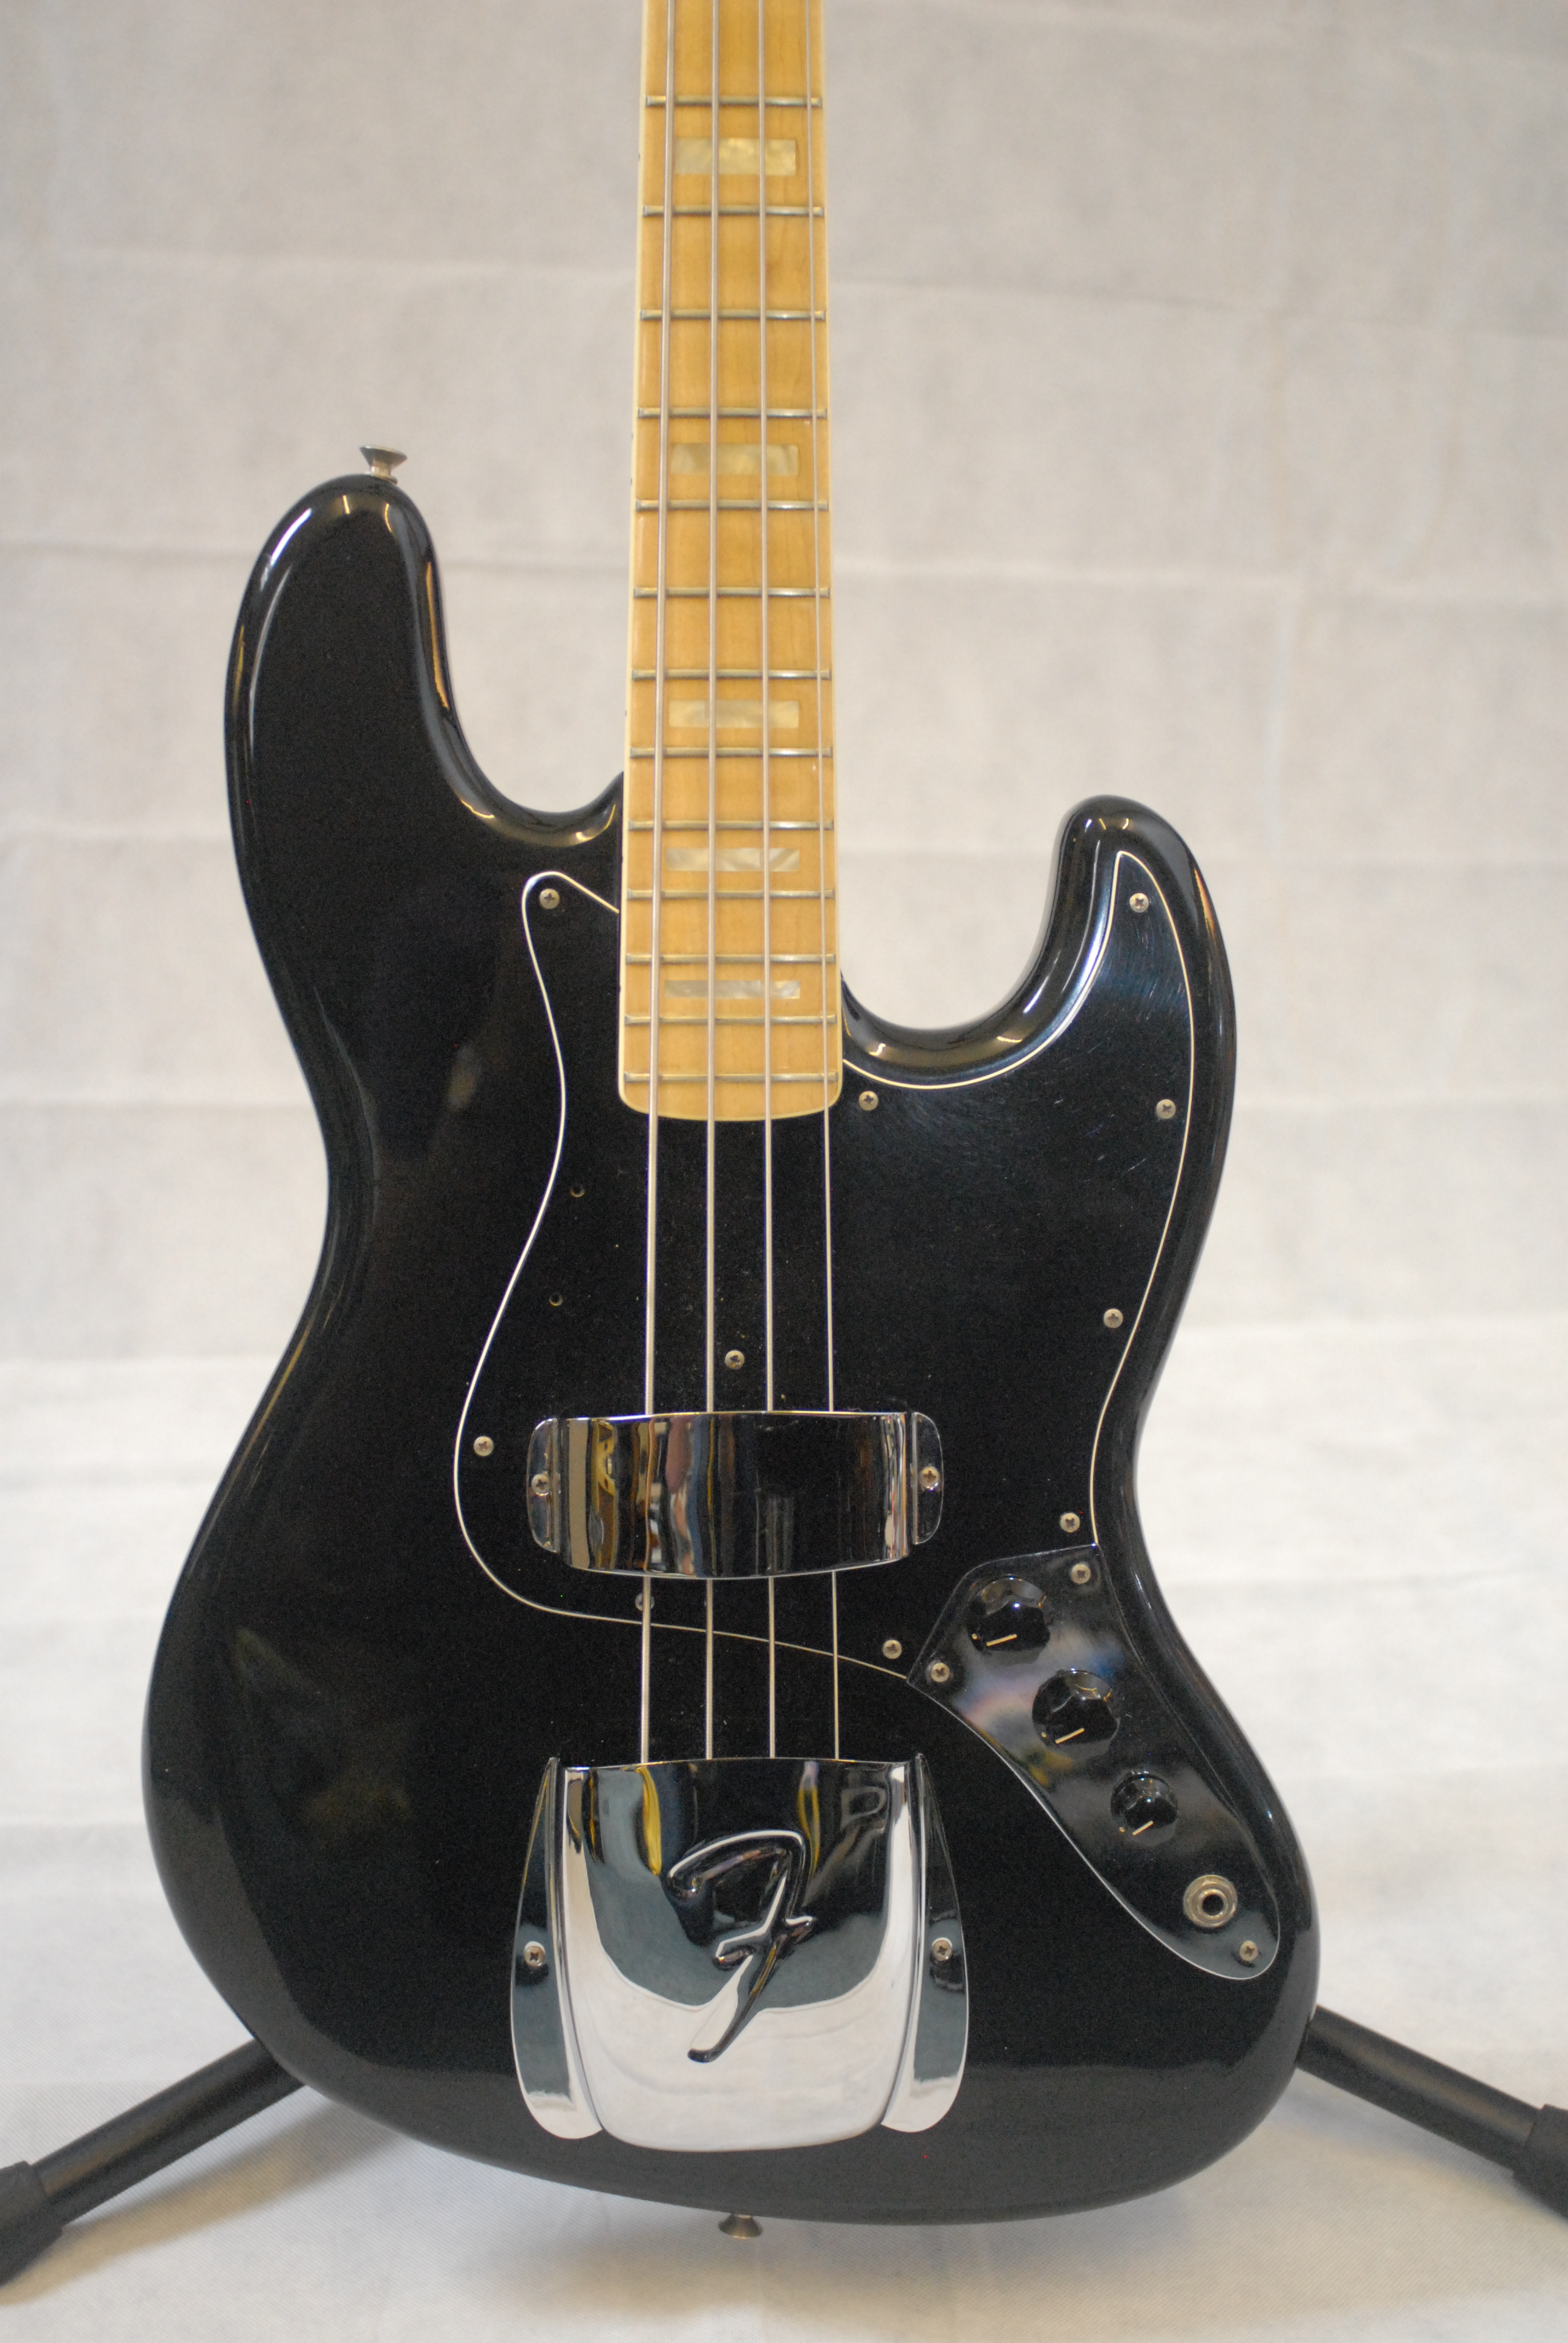 1977 Fender Jazz Bass USA Black with Black Guard Maple Neck "Nicknamed